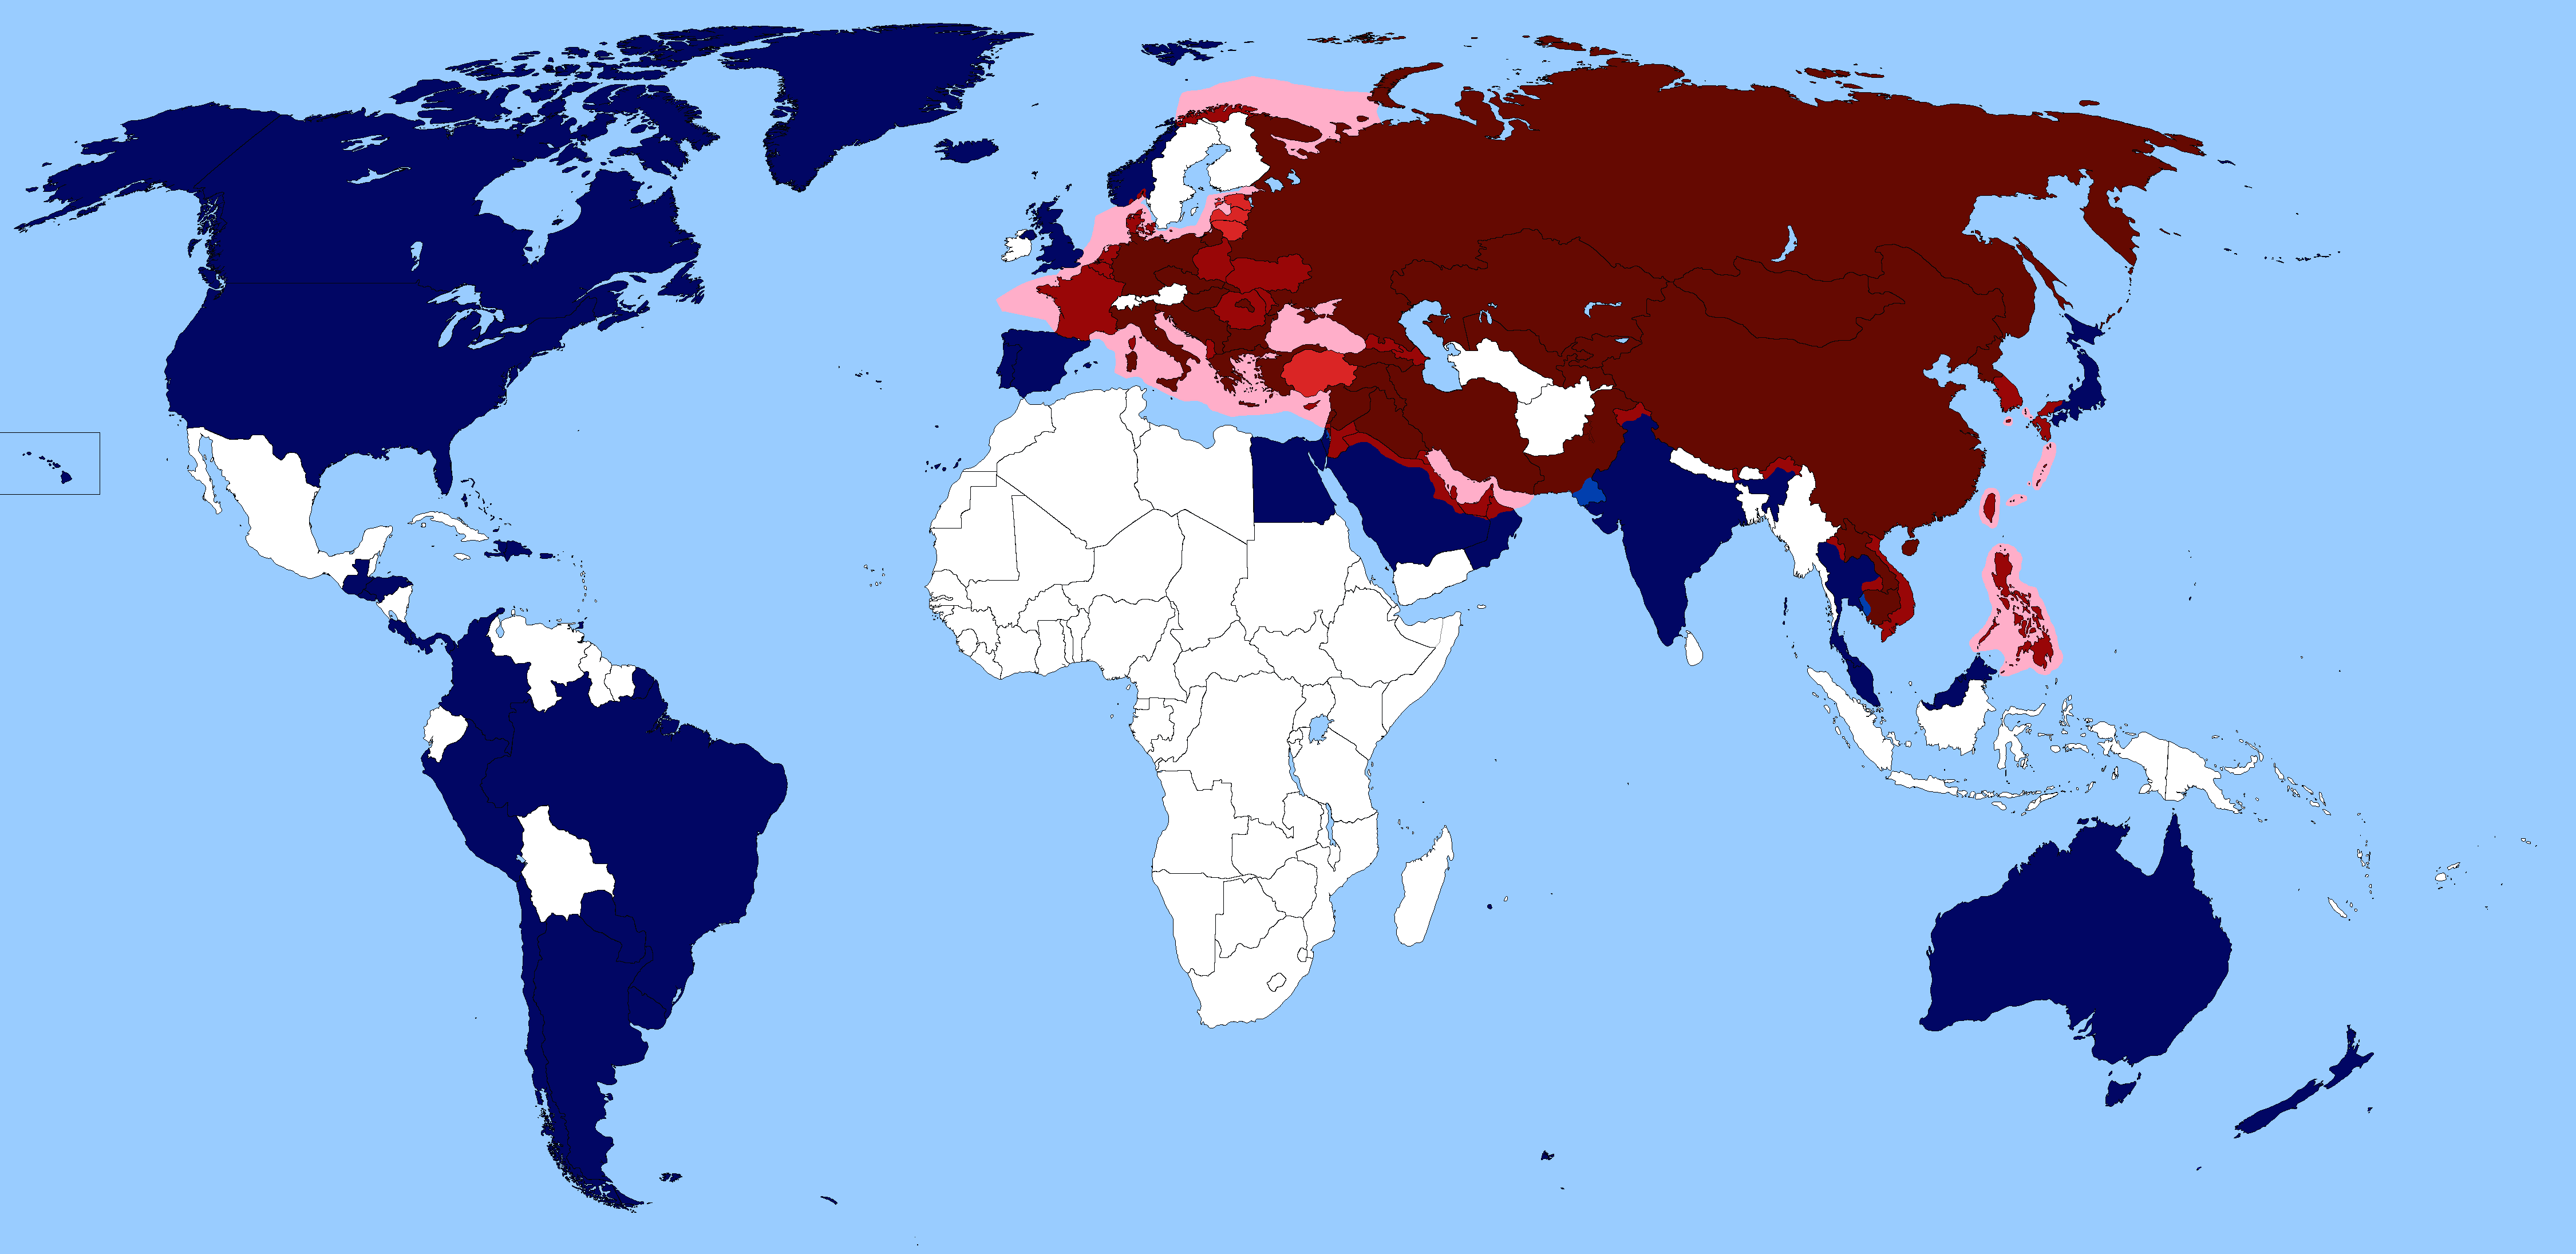 World War III Russia and China vs USA(part 2) by D-Okhapkin on DeviantArt